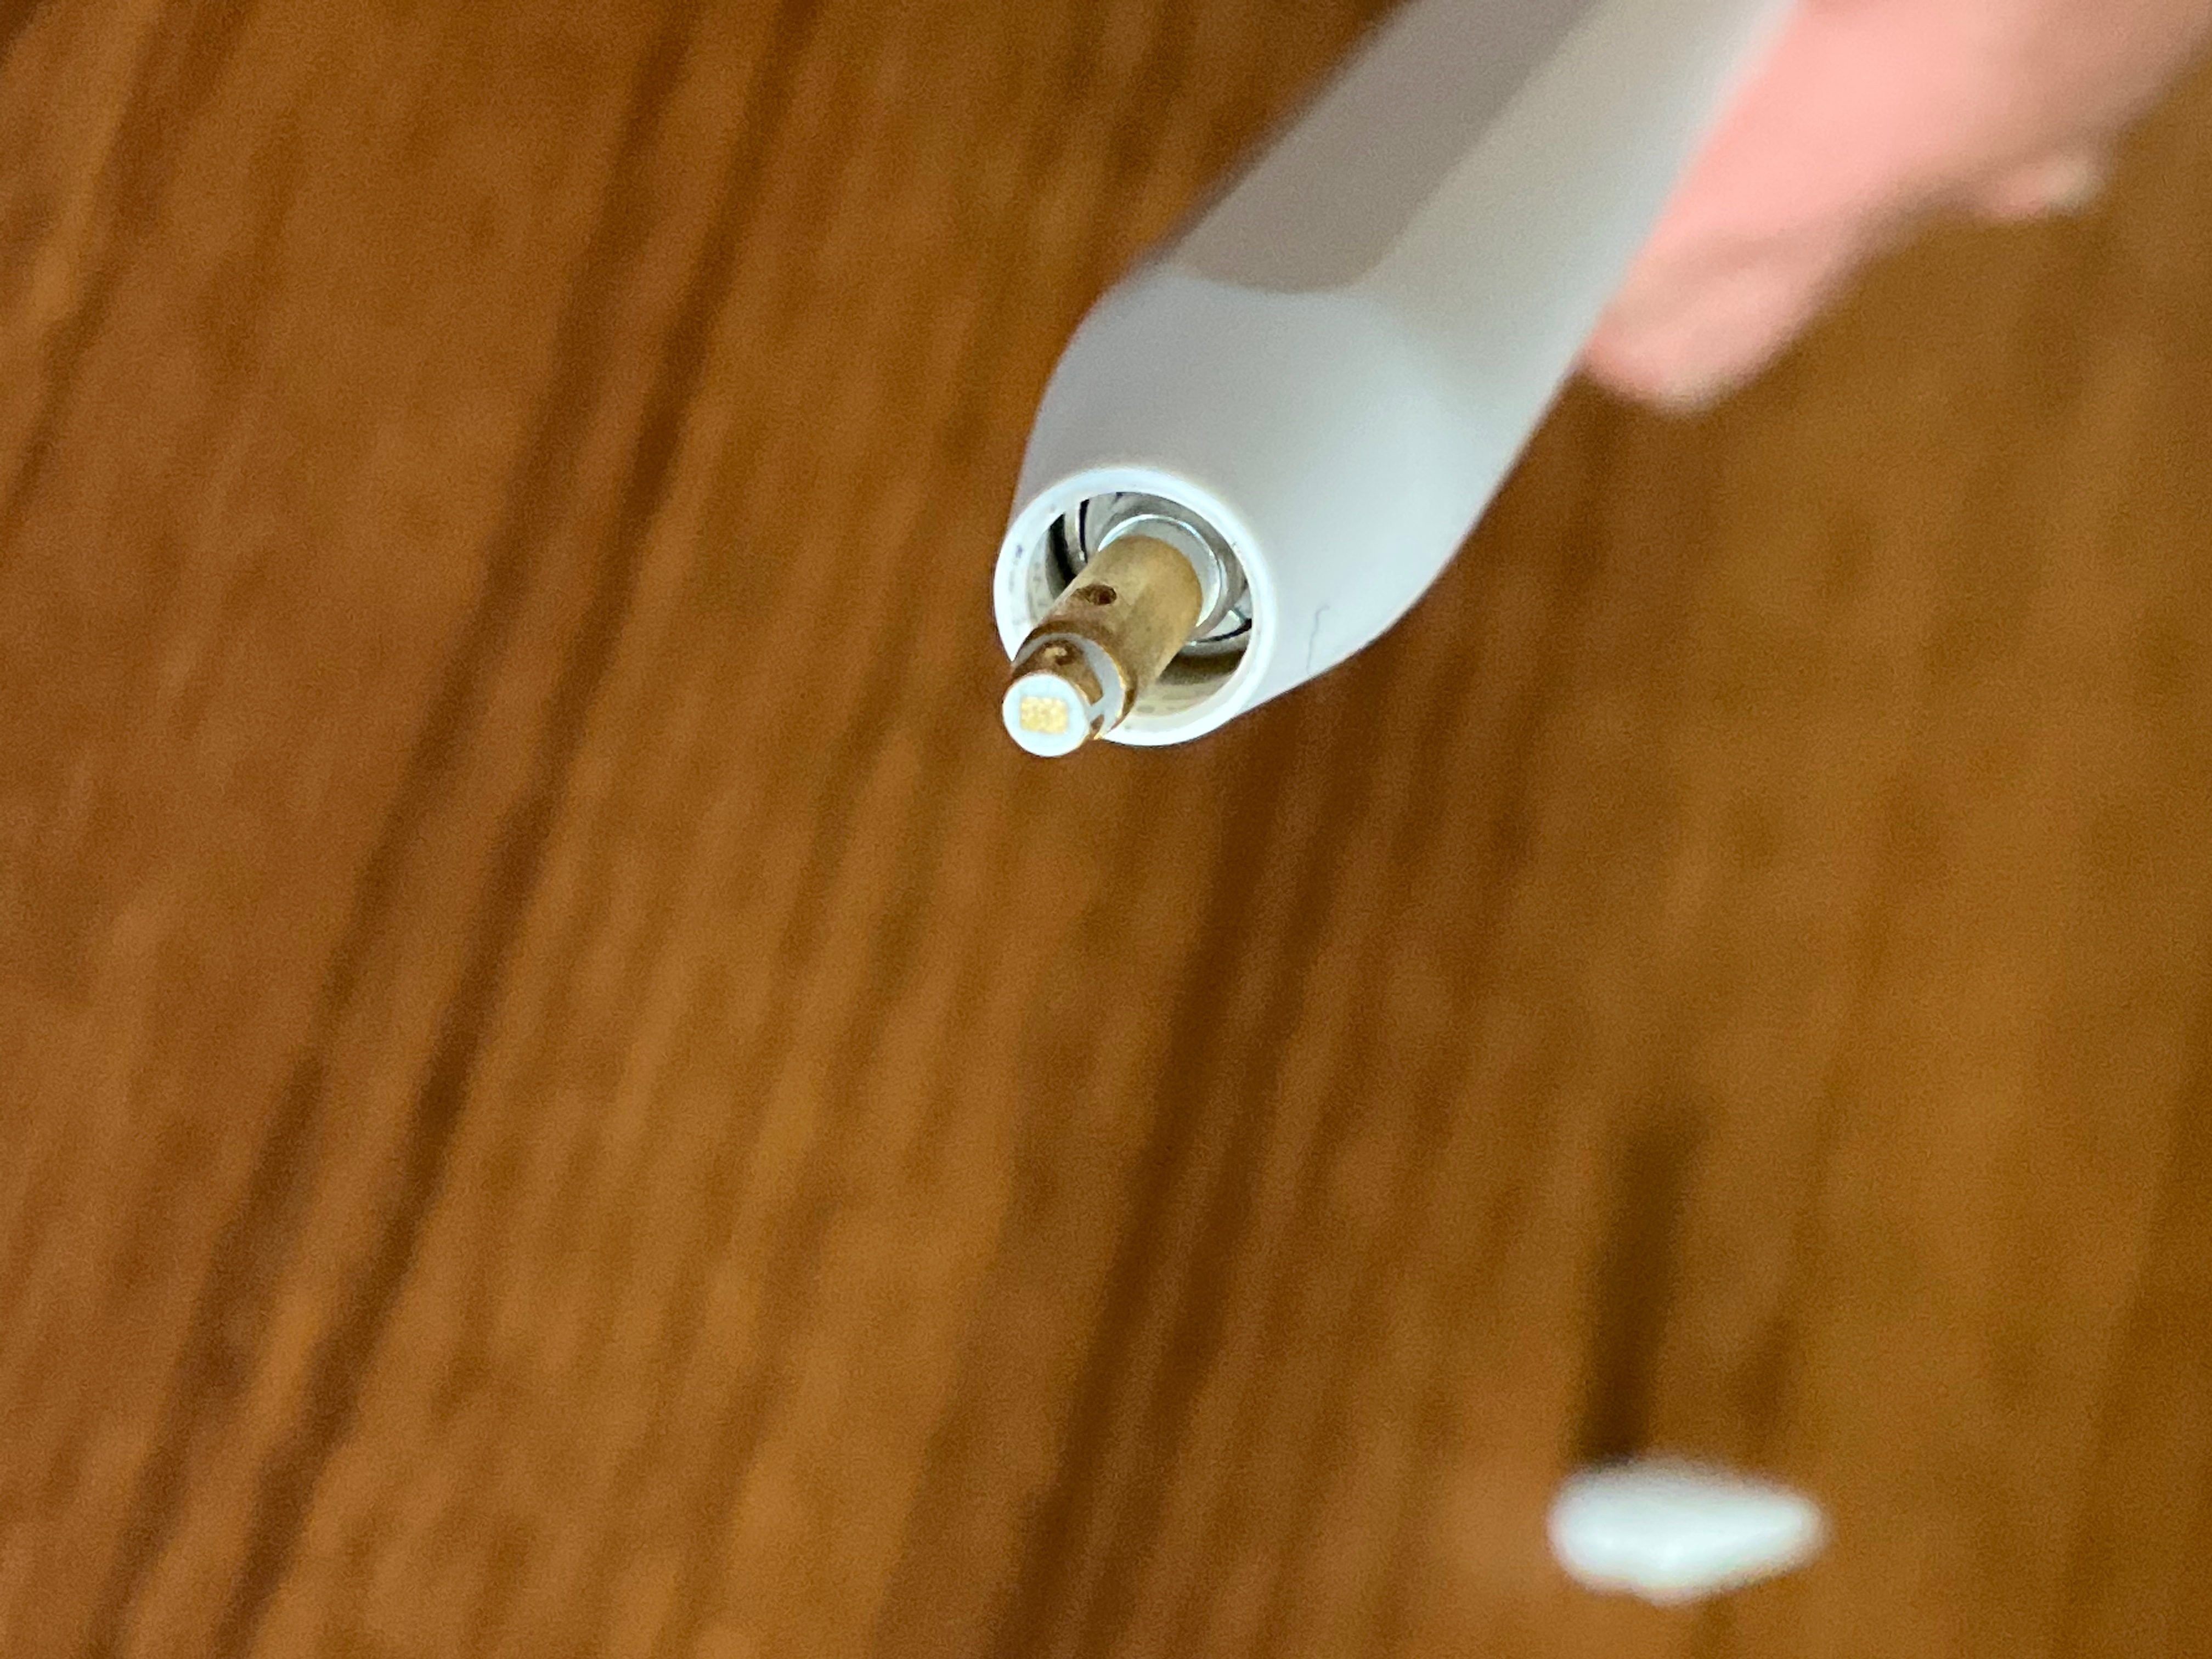 Can Apple Pencil get damaged?